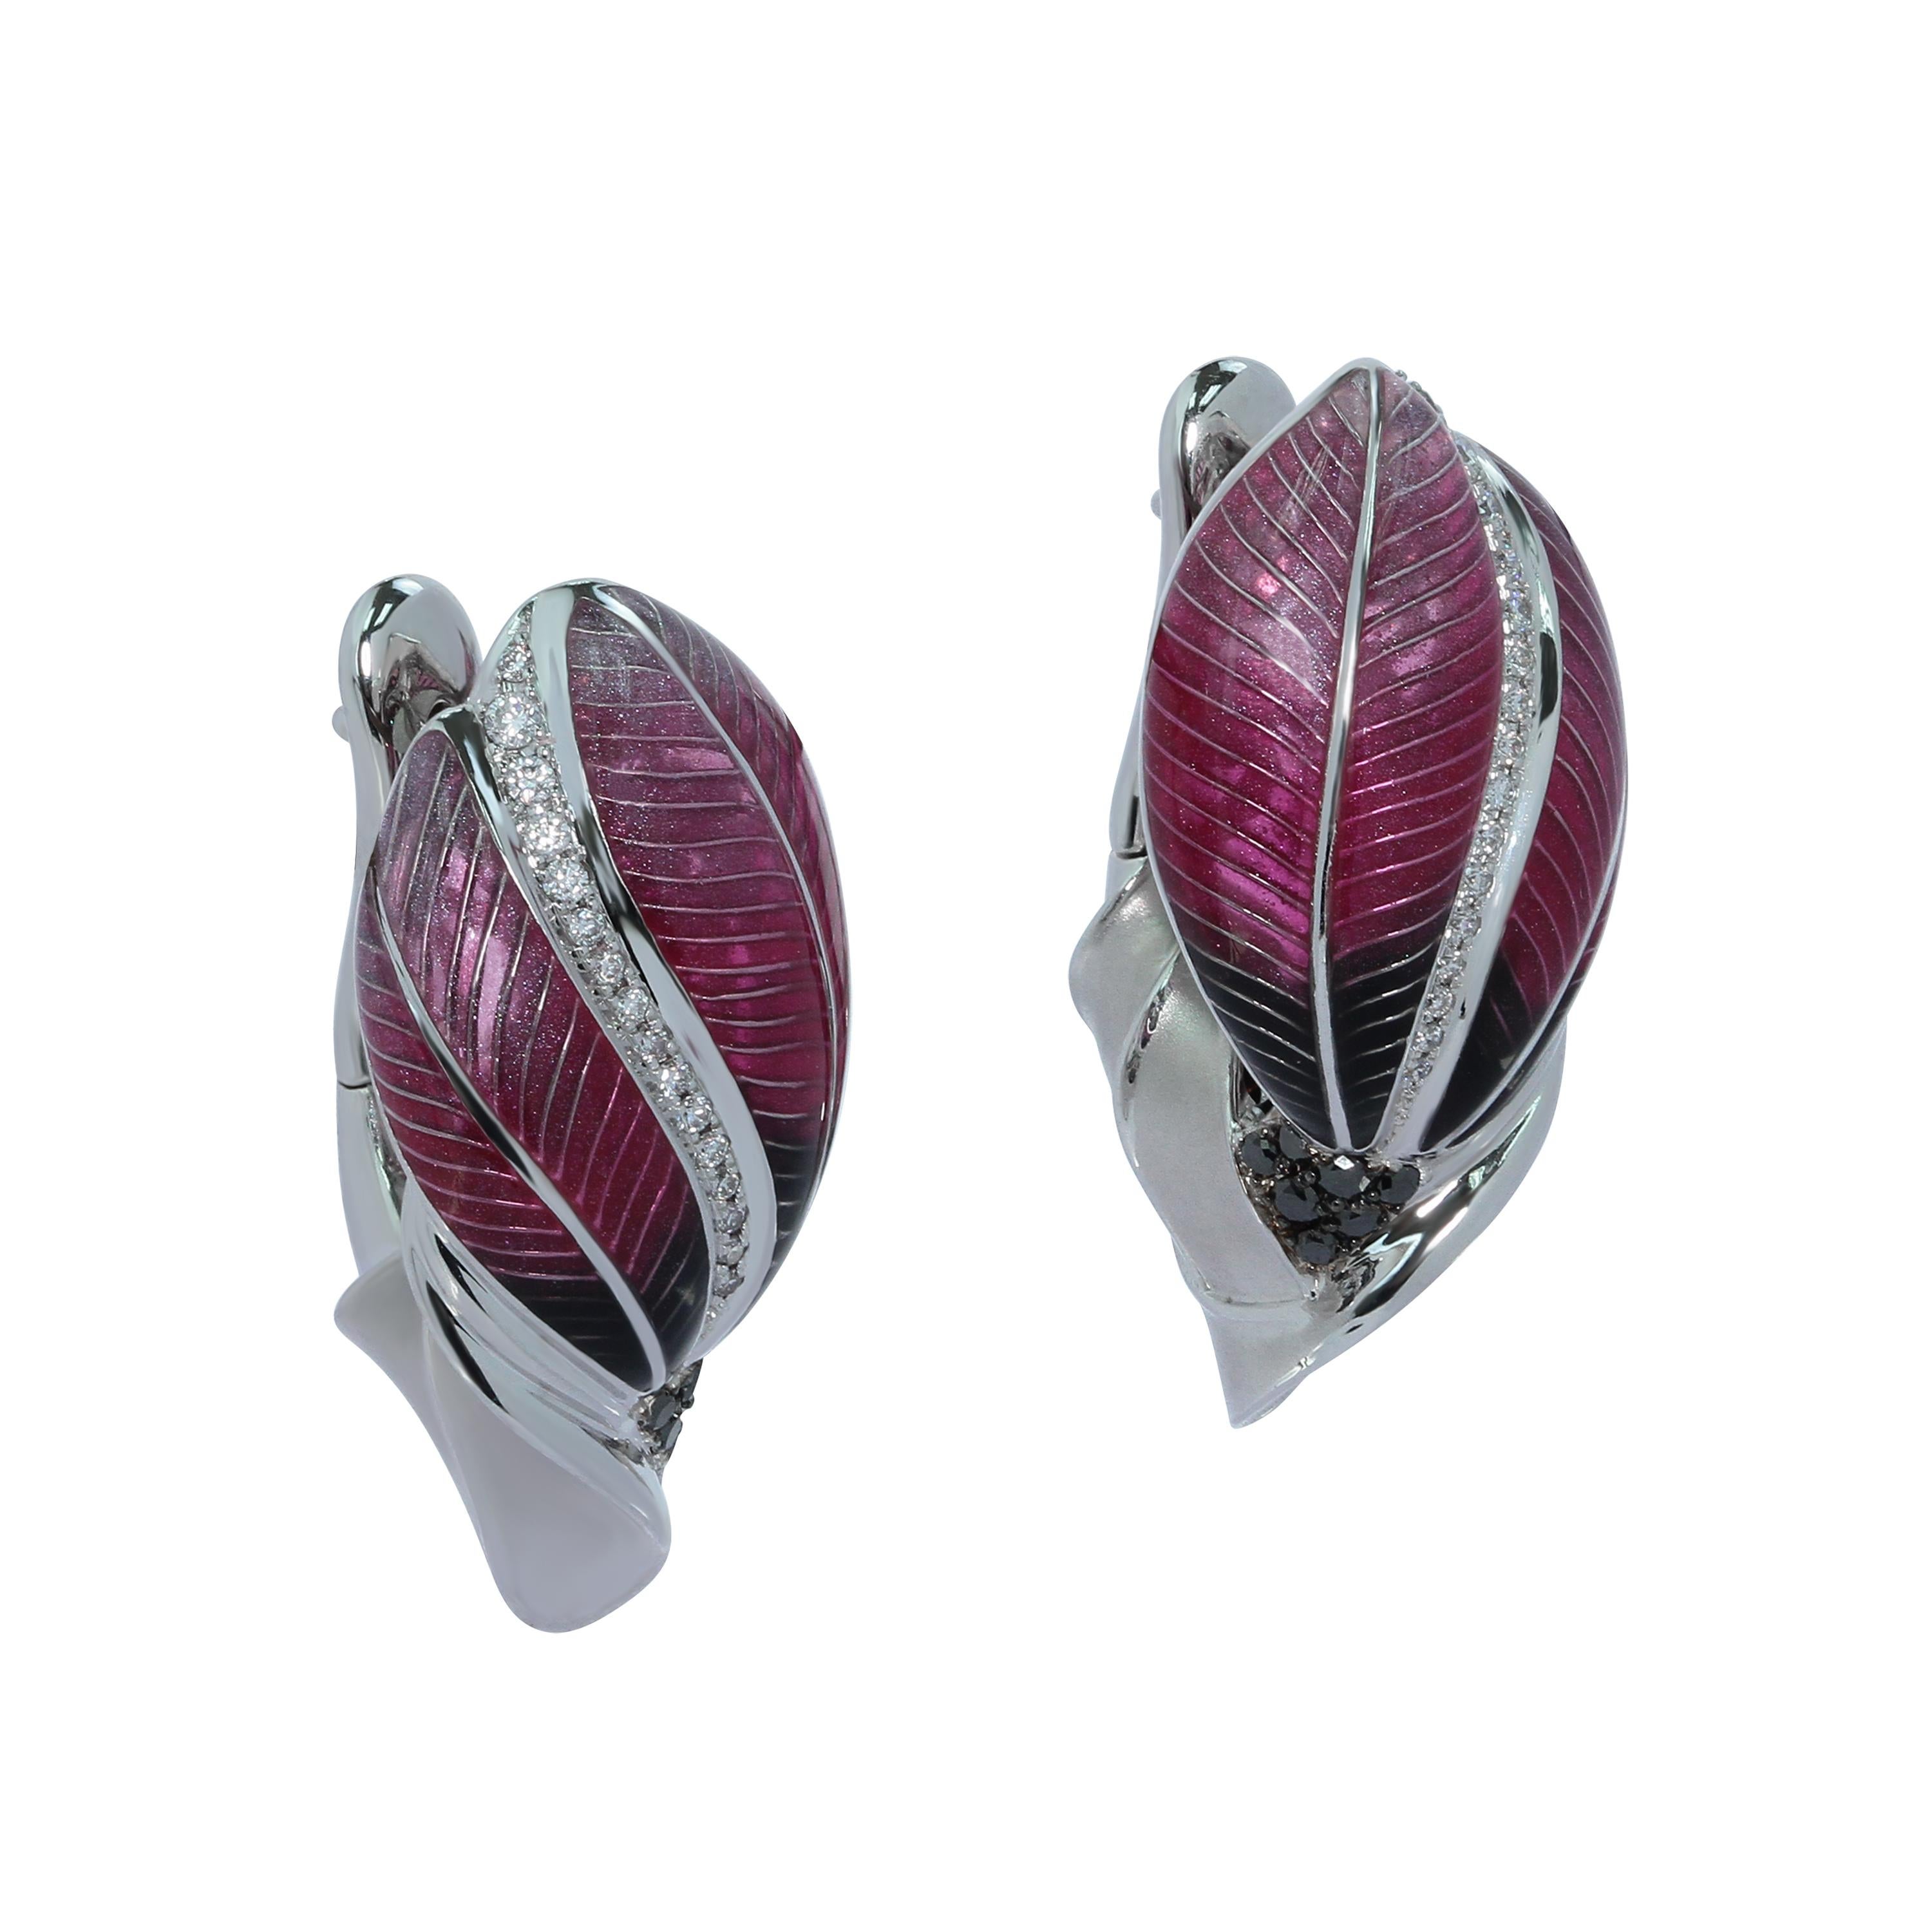 Black and White Diamonds Colored Enamel 18 Karat White Gold Tulip Earrings.
Elegant Tulip Earrings from our 